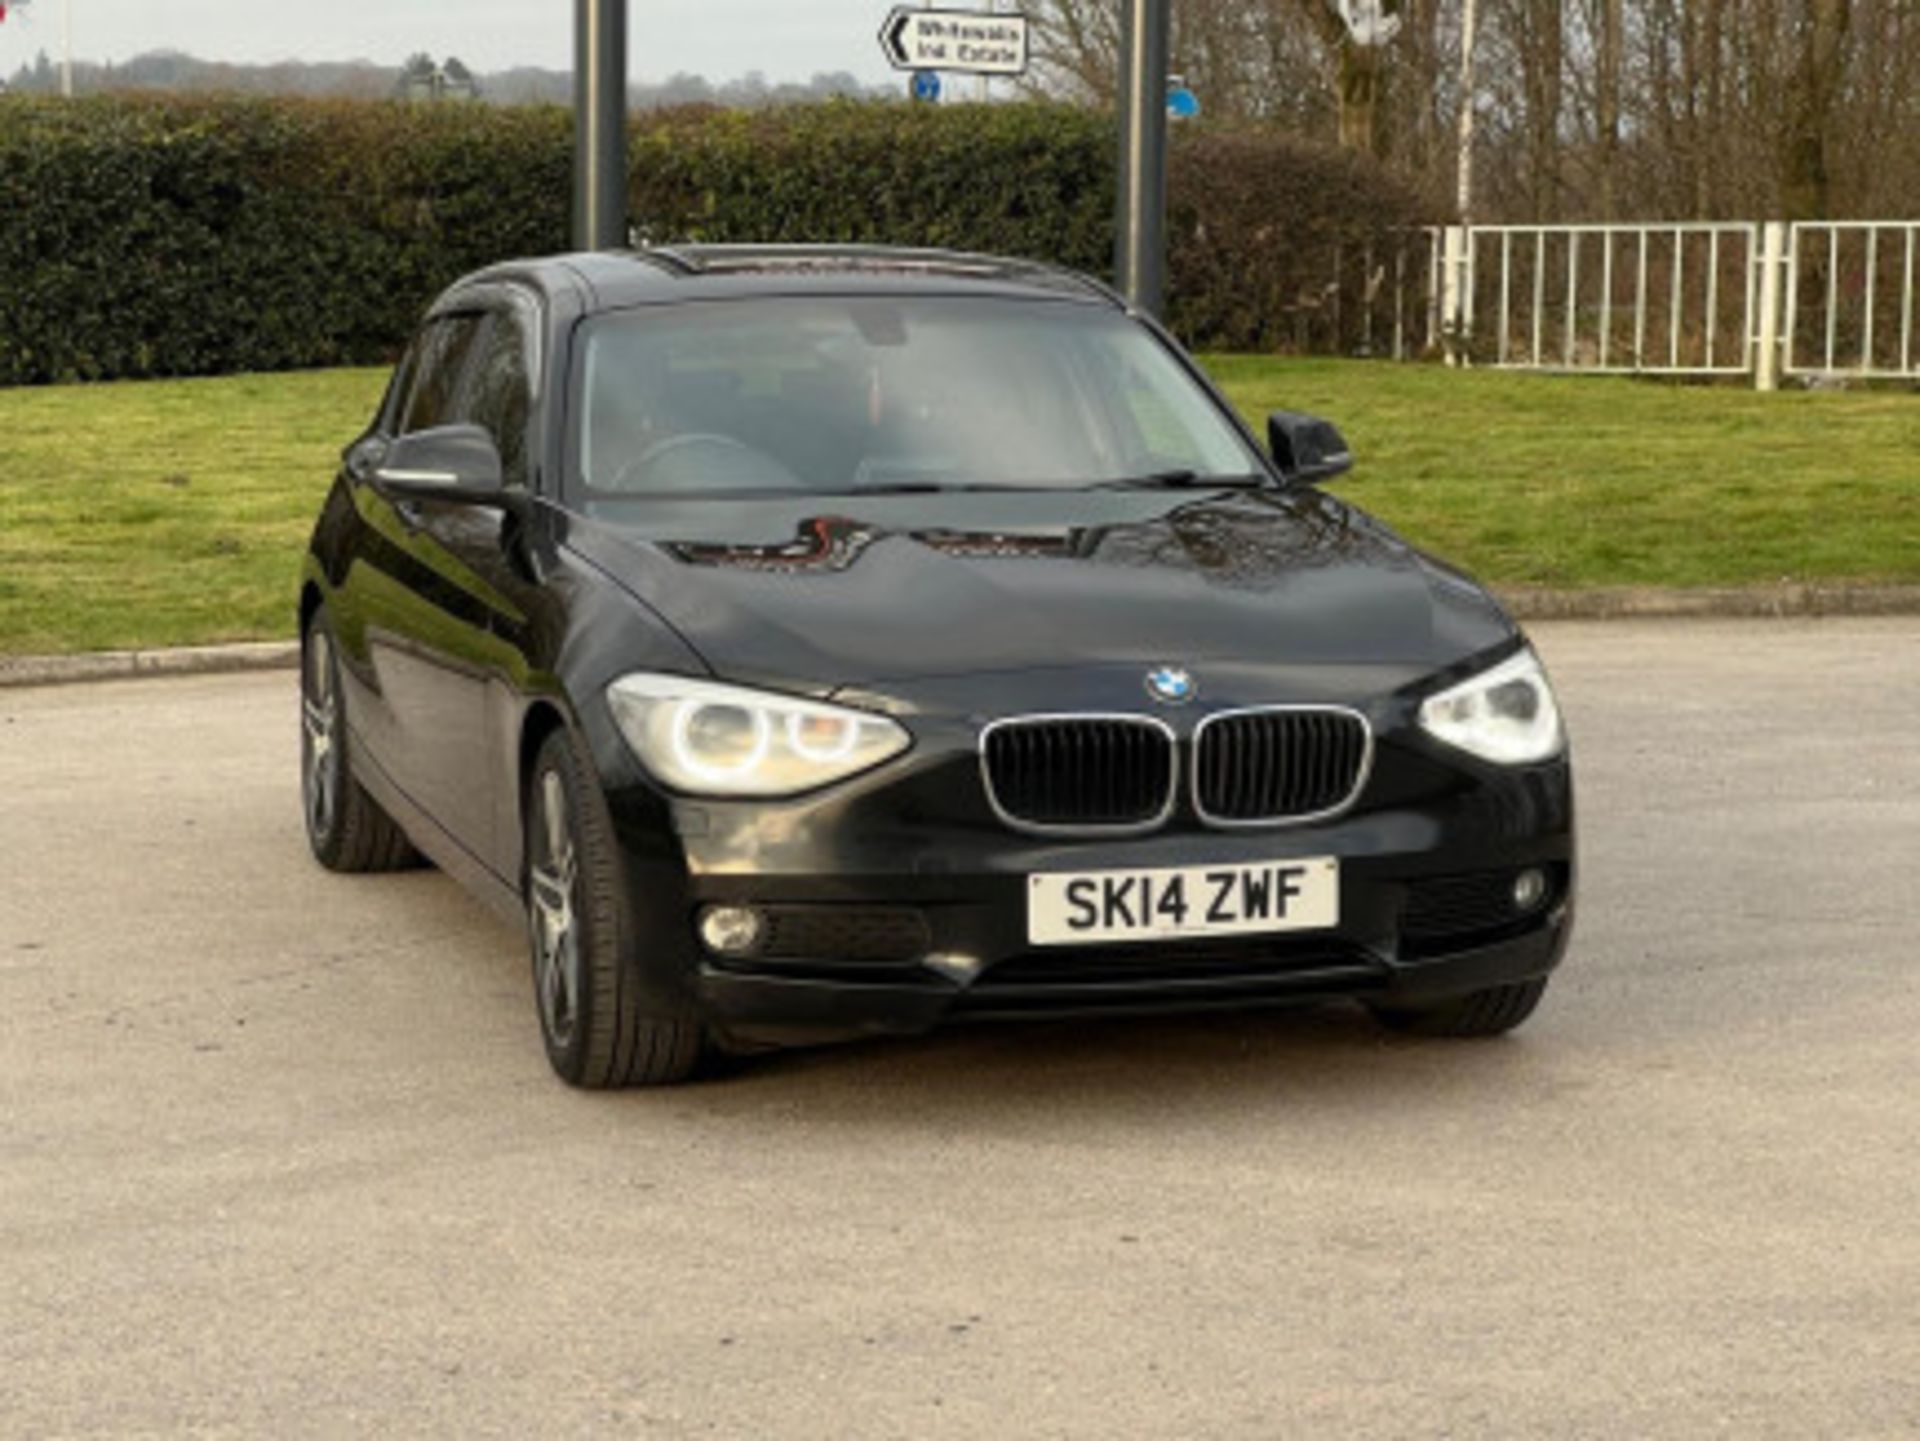 2014 BMW 1 SERIES 1.6 116D ED EFFICIENT DYNAMICS BUSINESS 5DR >>--NO VAT ON HAMMER--<< - Image 38 of 80